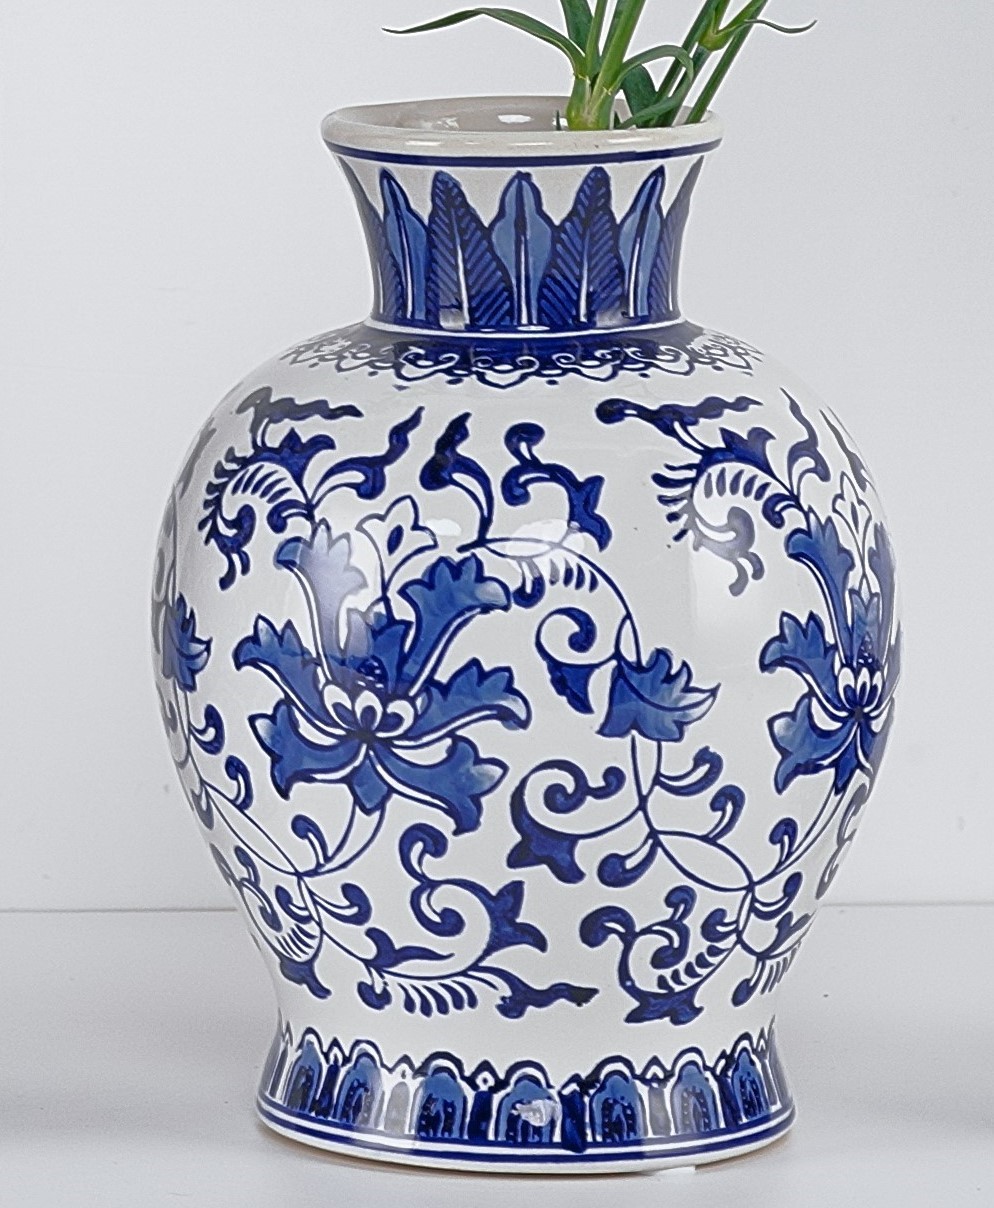 9 Ceramic Vase, Blue White Floral